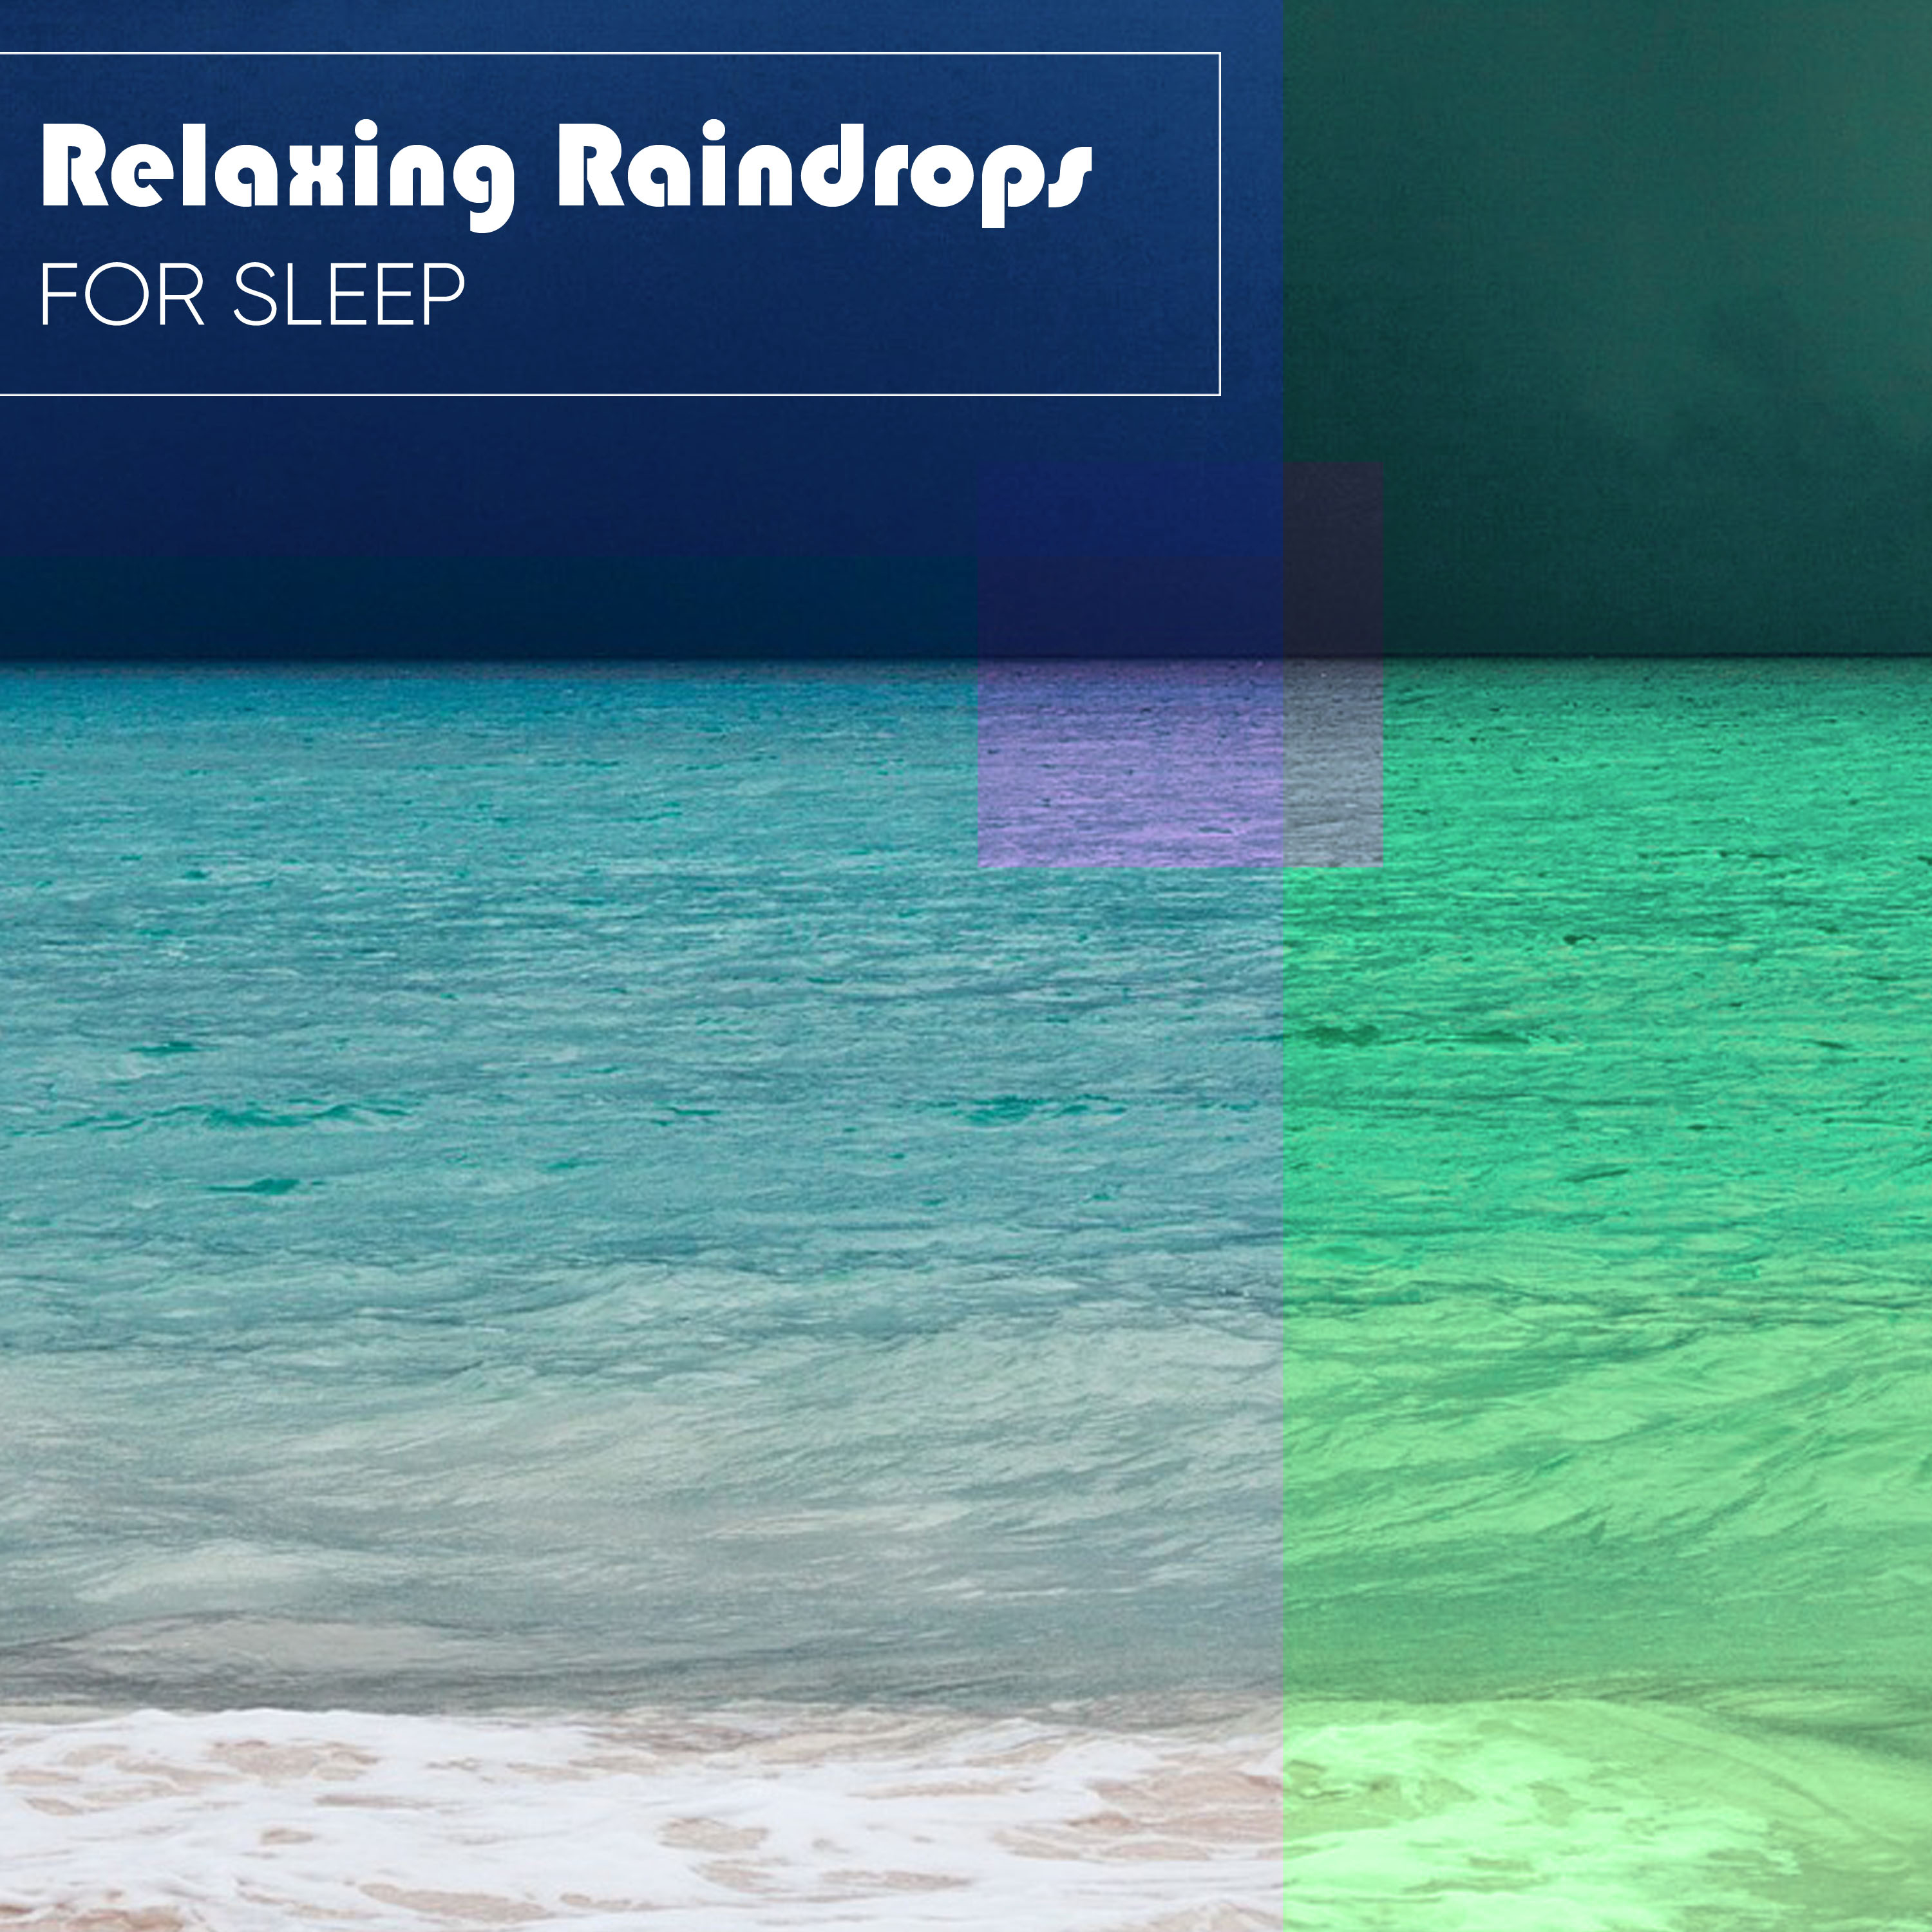 Relaxing Raindrops for Sleep